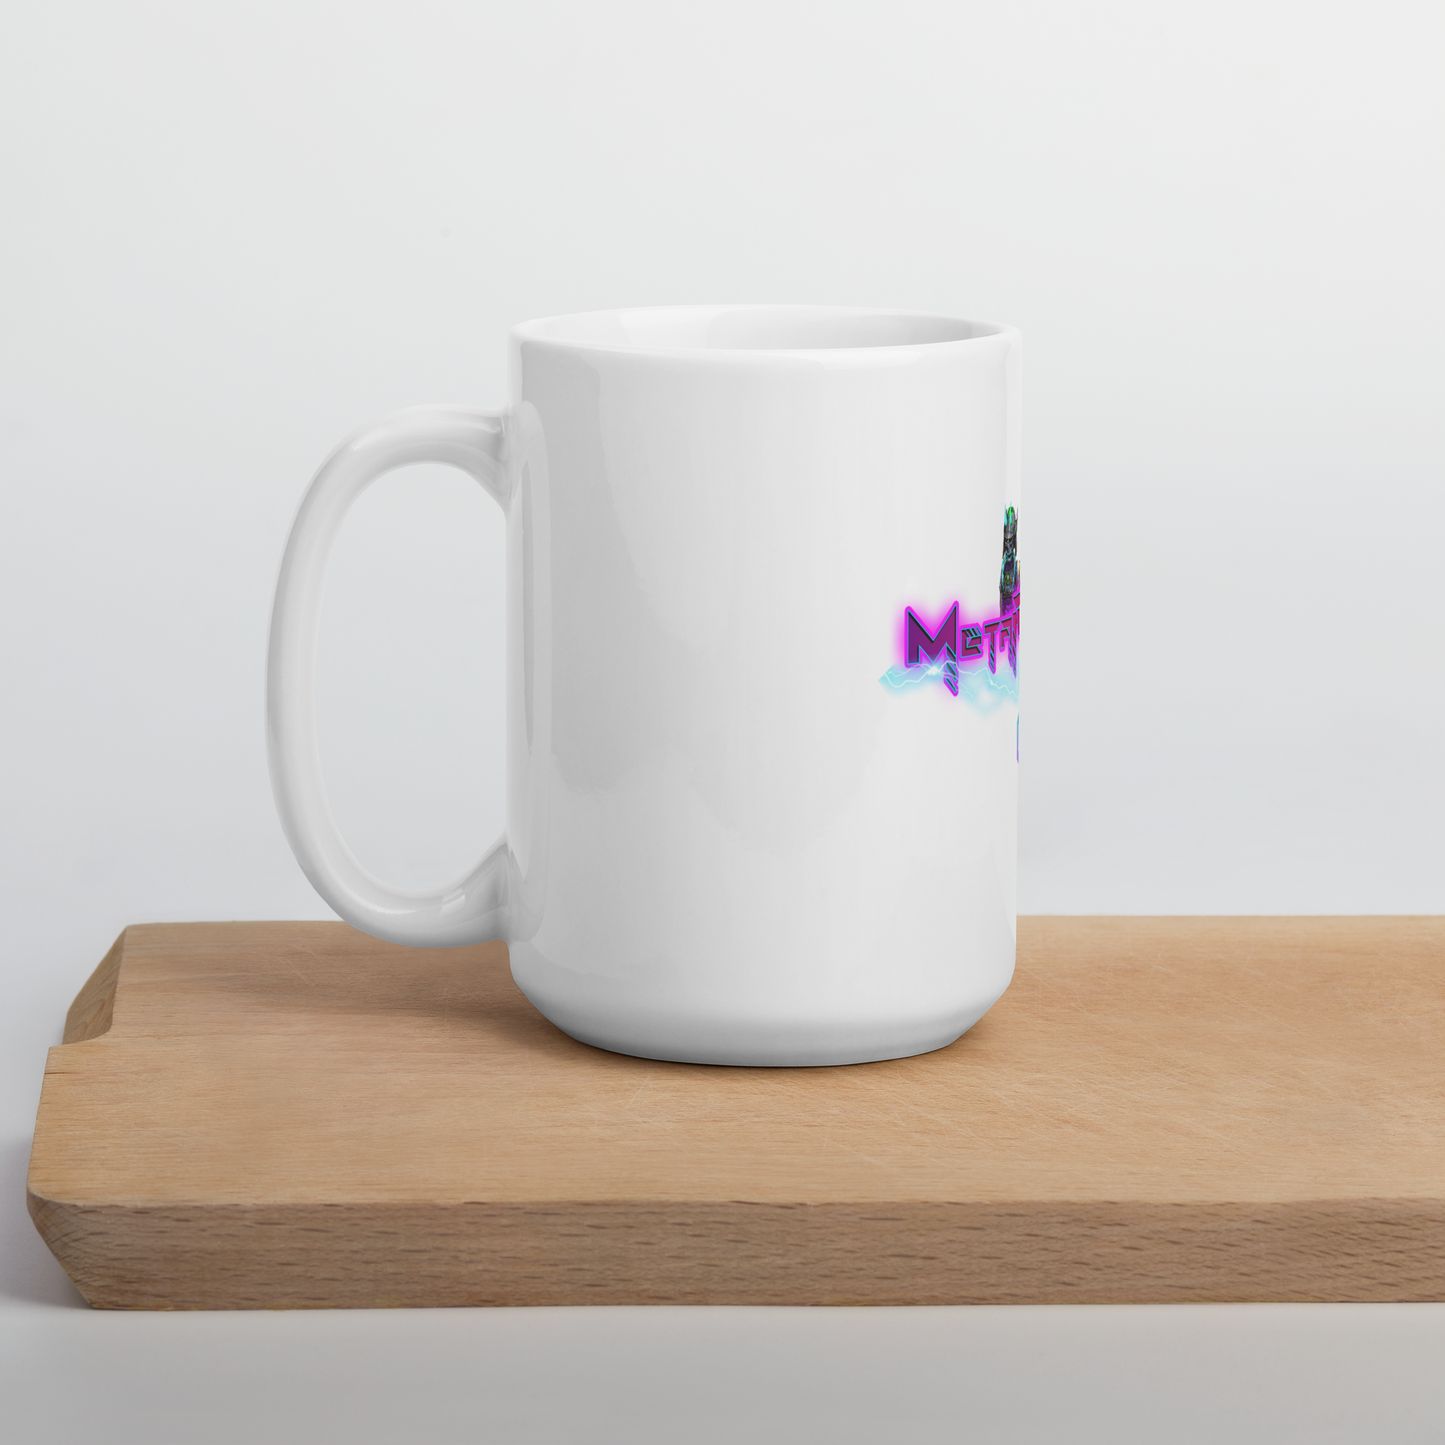 MetaRangers glossy mug